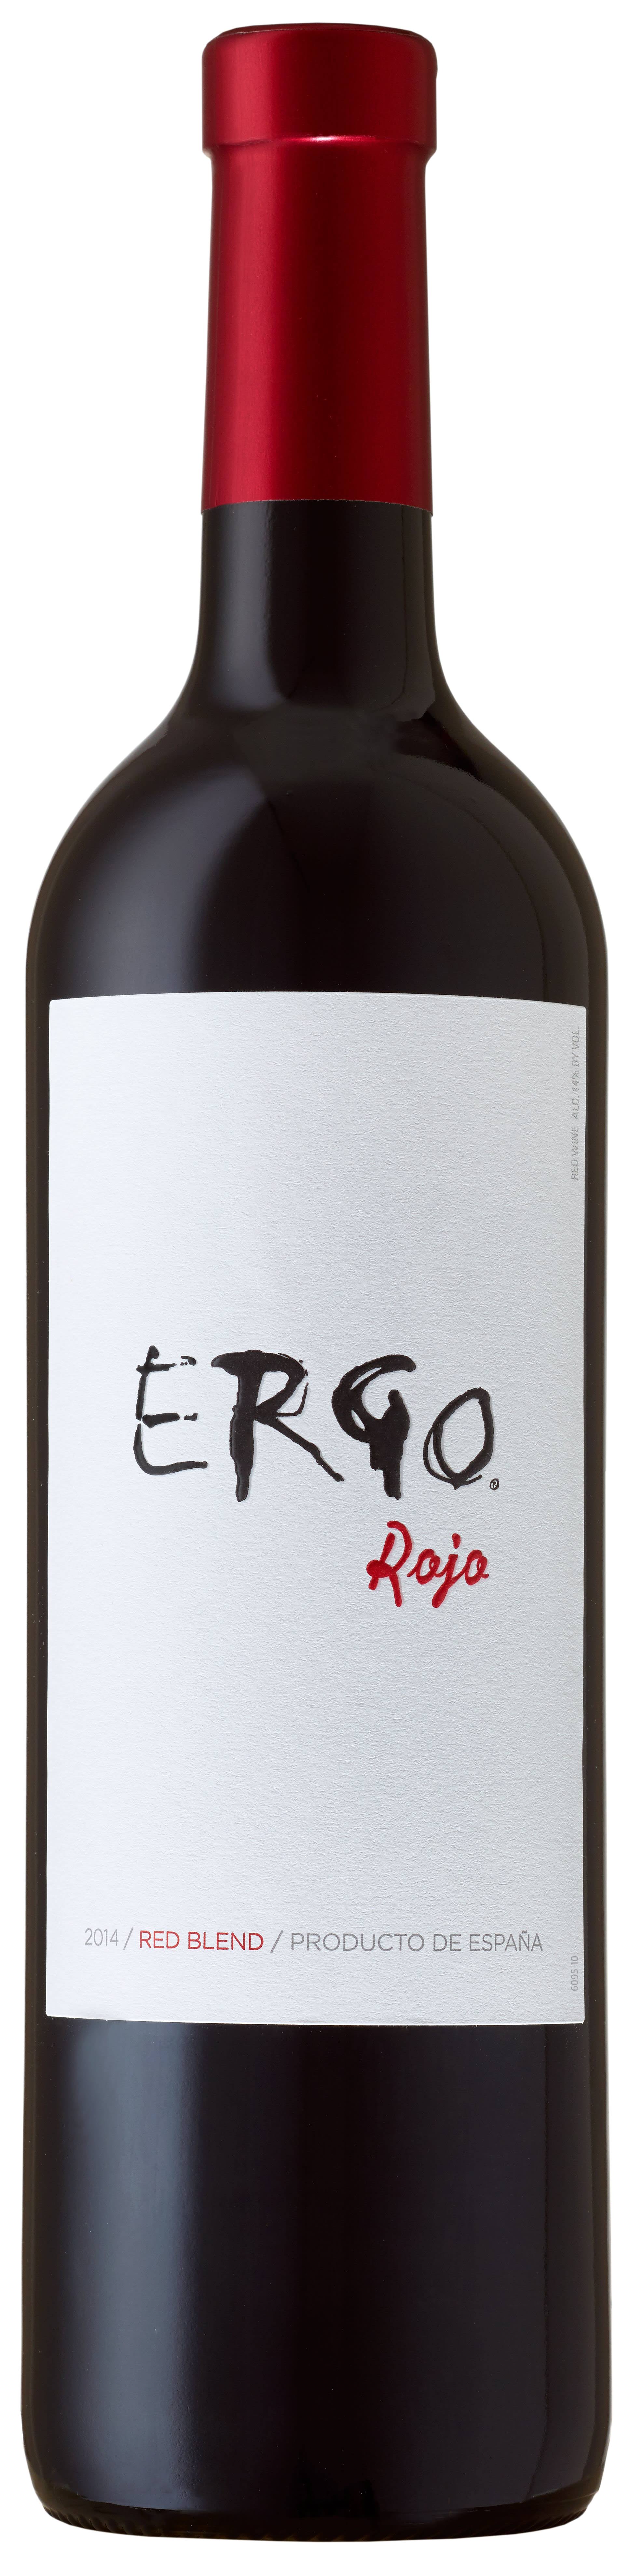 Ergo Tempranillo, Rioja, 2006 - 750 ml